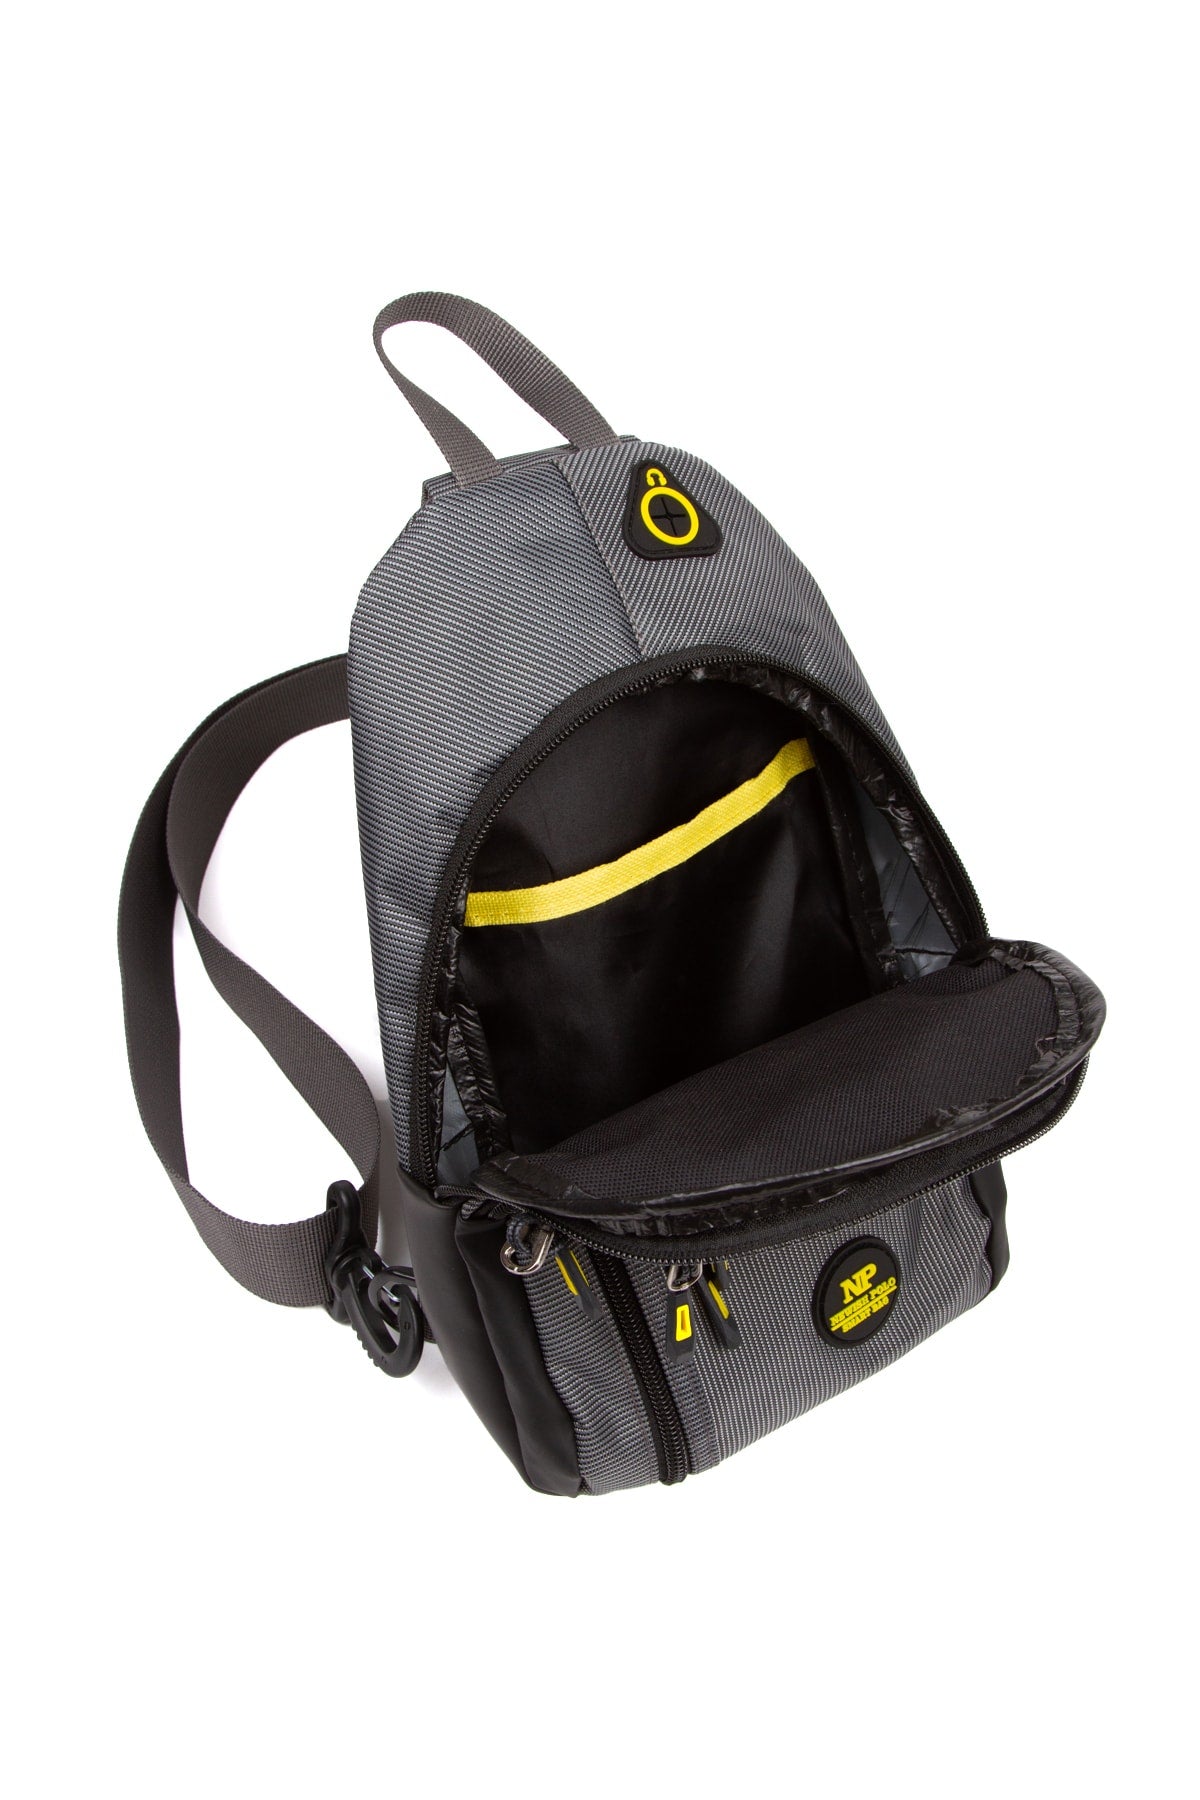 Unisex İmperteks Cross Shoulder and Waist Bag Suitable for Travel and Sports Use